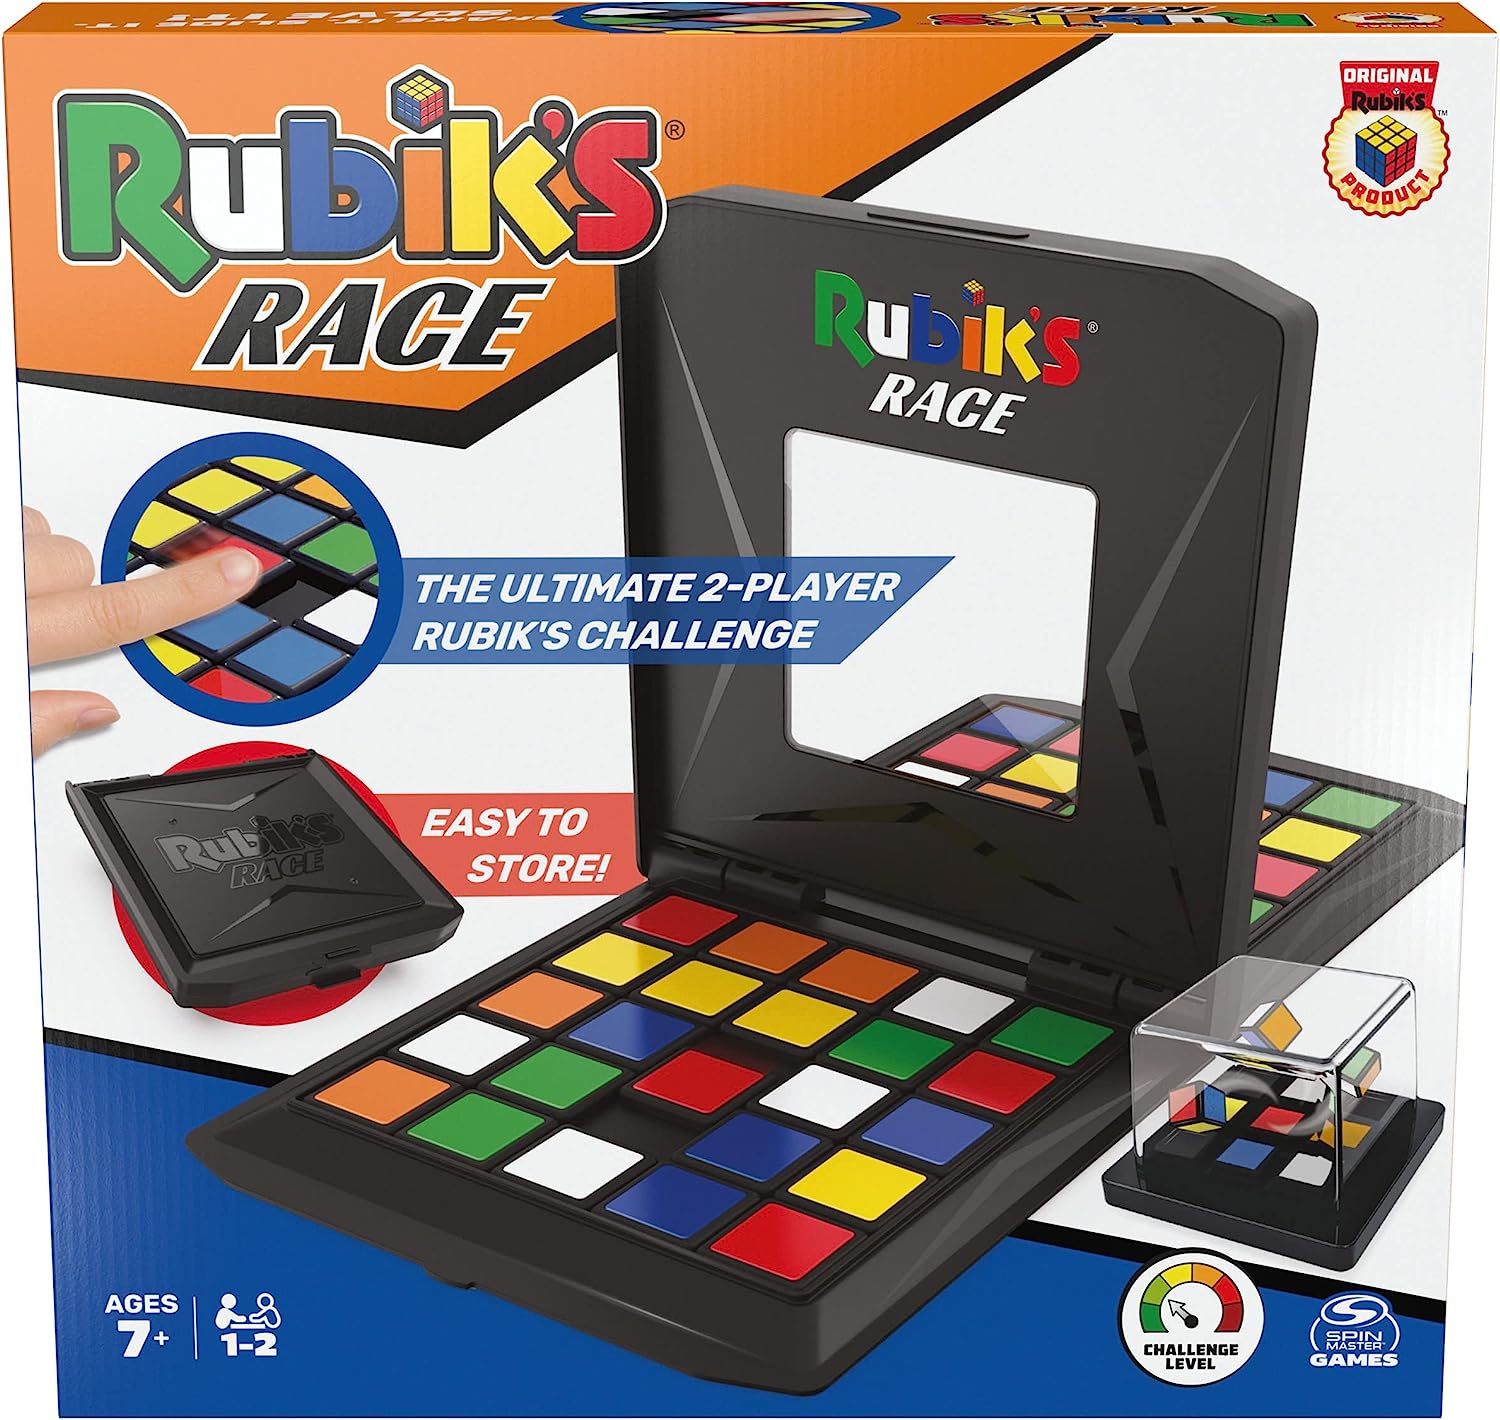 Ver categoría de carrera de rubik’s (rubik’s race)